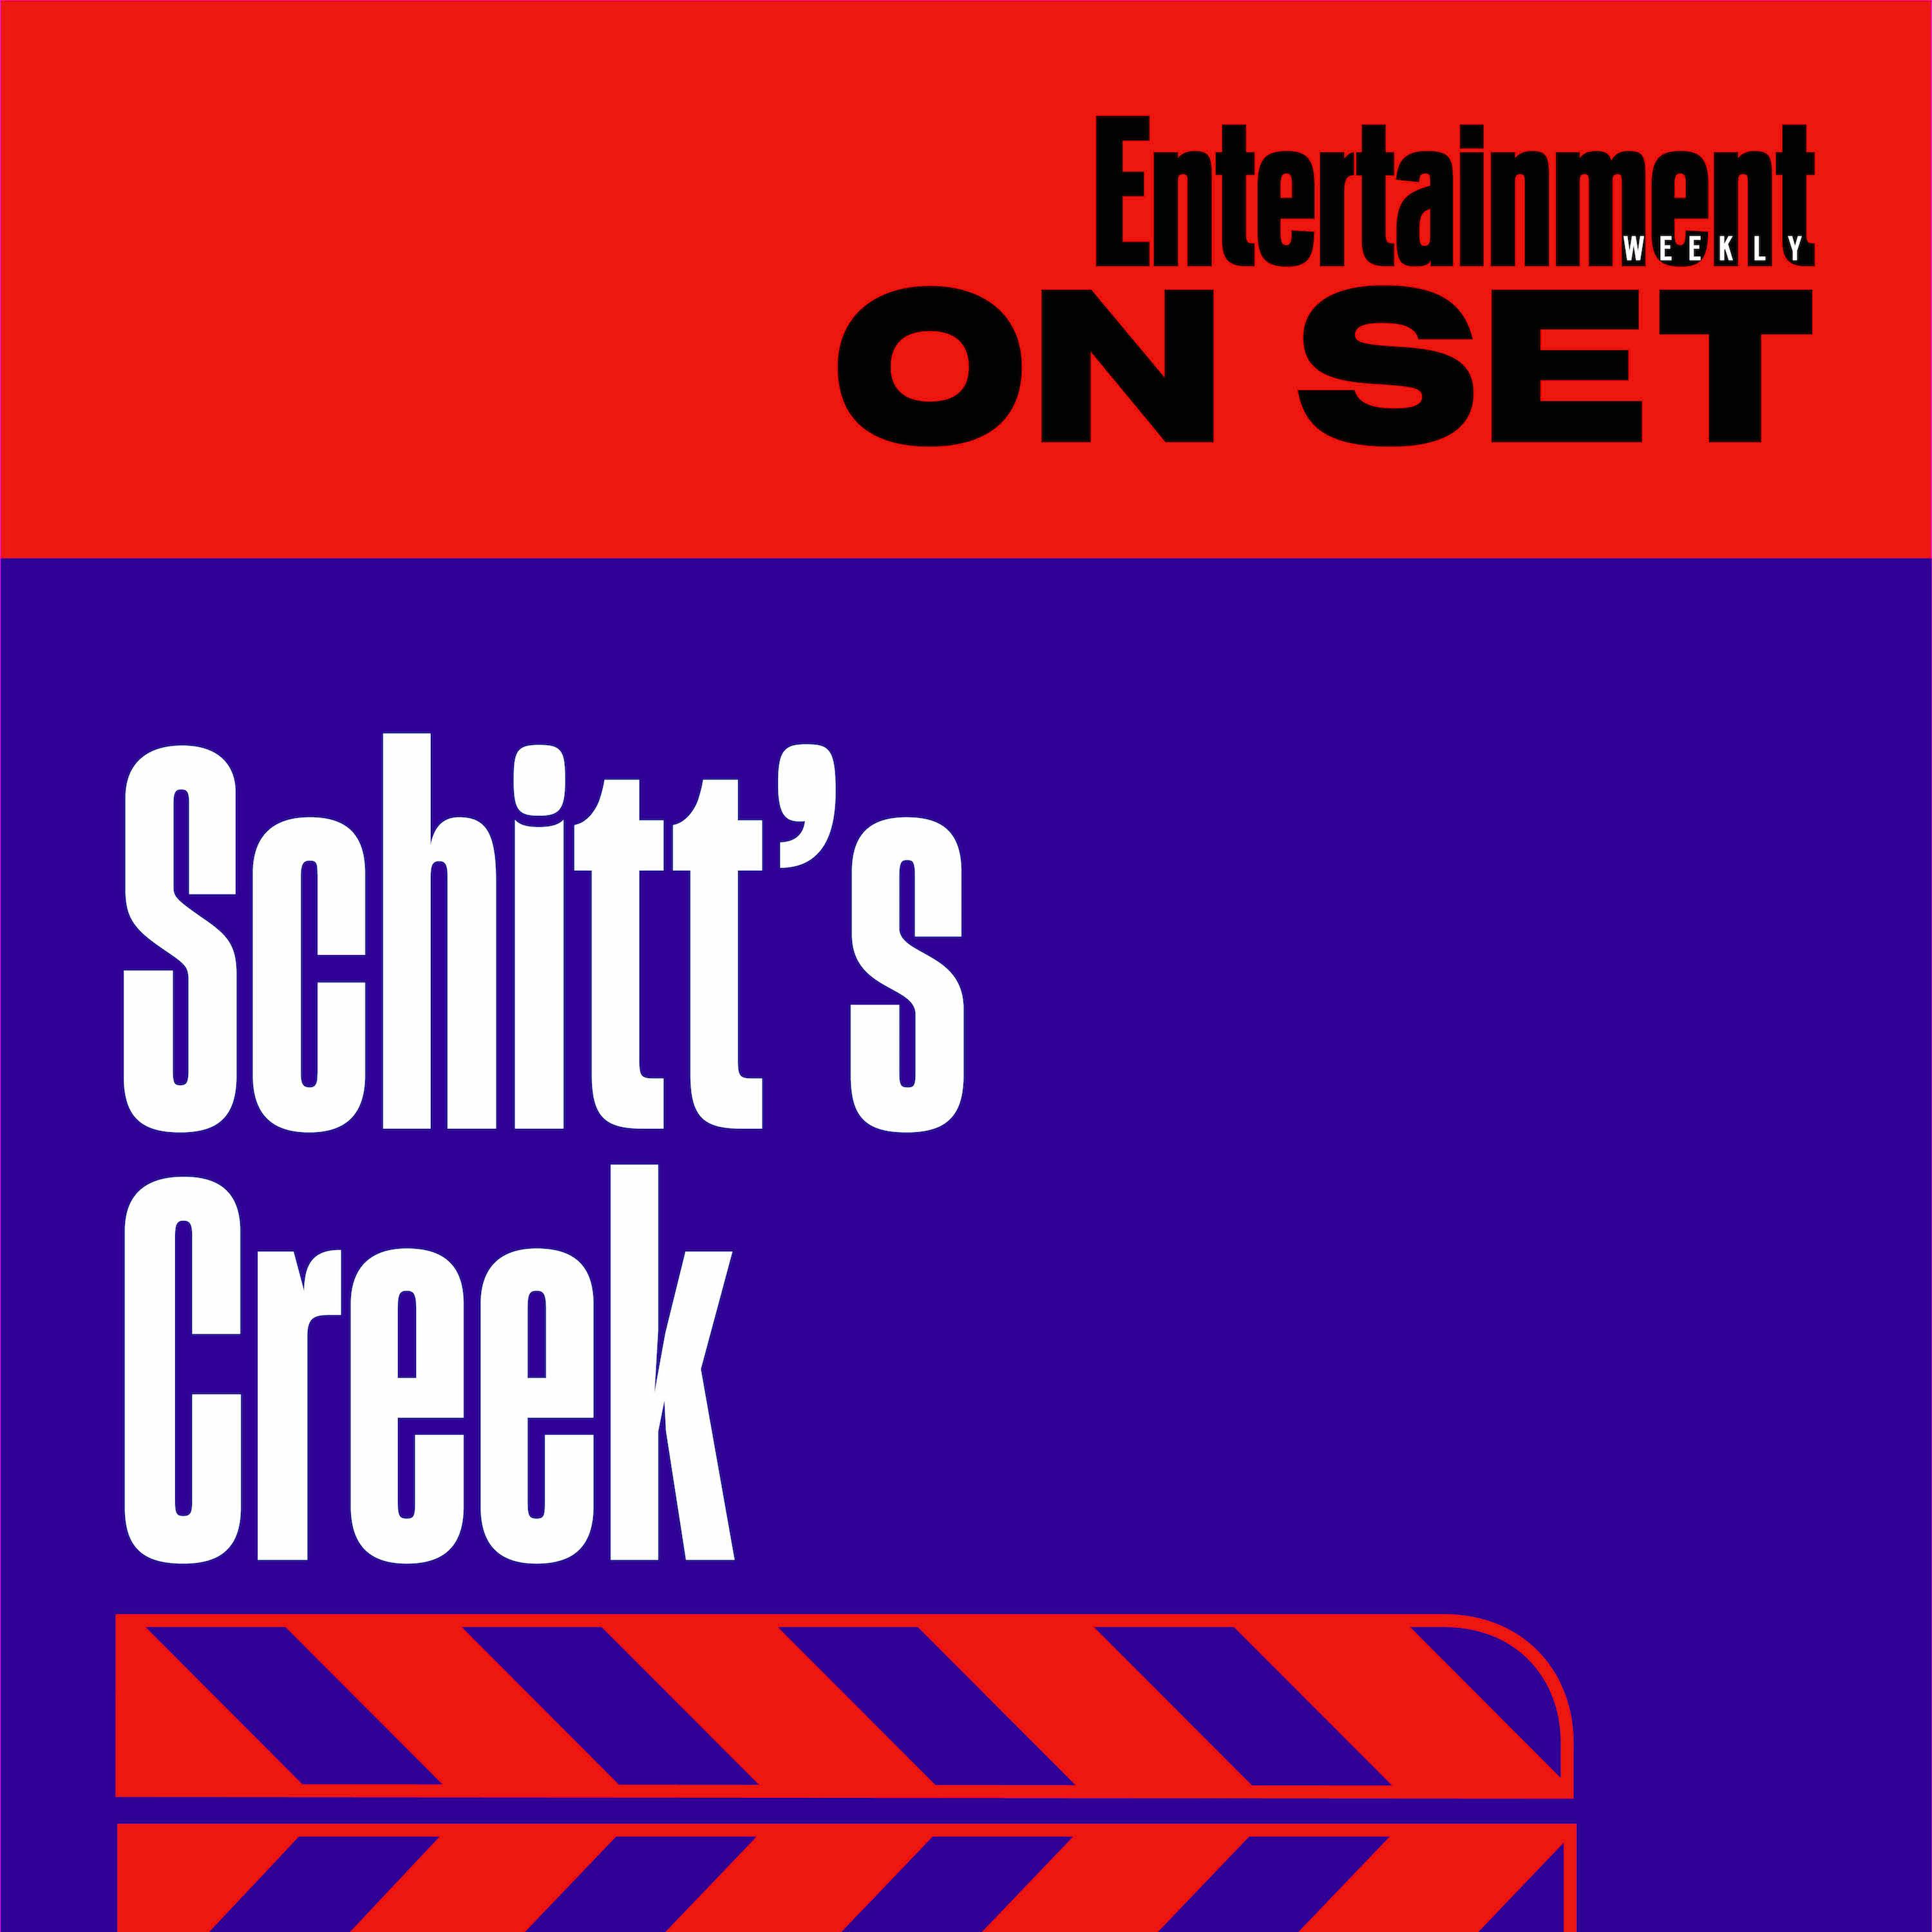 EW On Set: Schitt's Creek Episode 6.13 "Start Spreading the News"